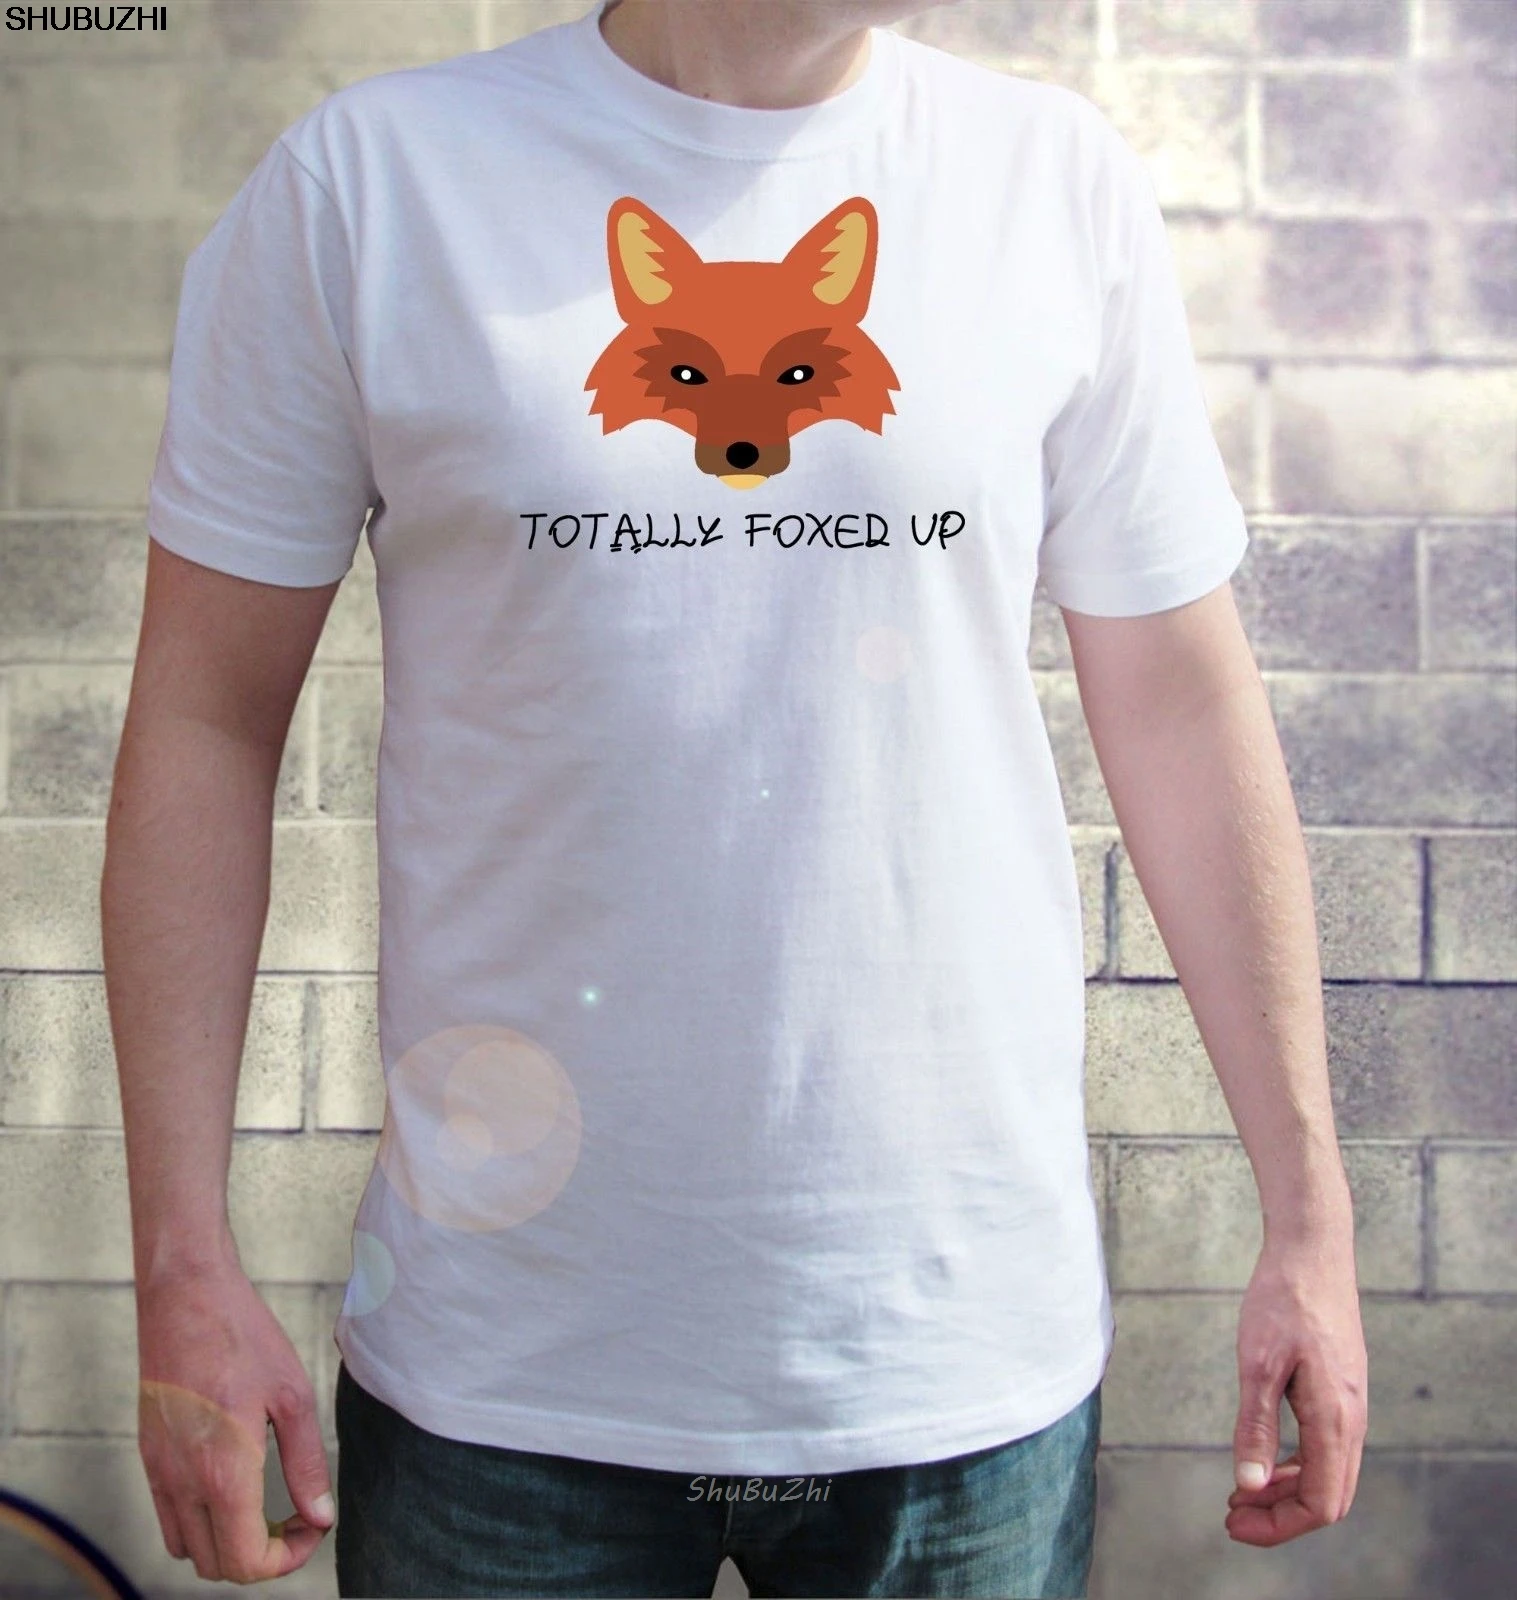 Foxed Up Men T-shirt Totally Funny Fluent Sarcasm Humour Tees Animal Fox Cartoon t shirt men Unisex New shubuzhi tshirt sbz3030 | Мужская